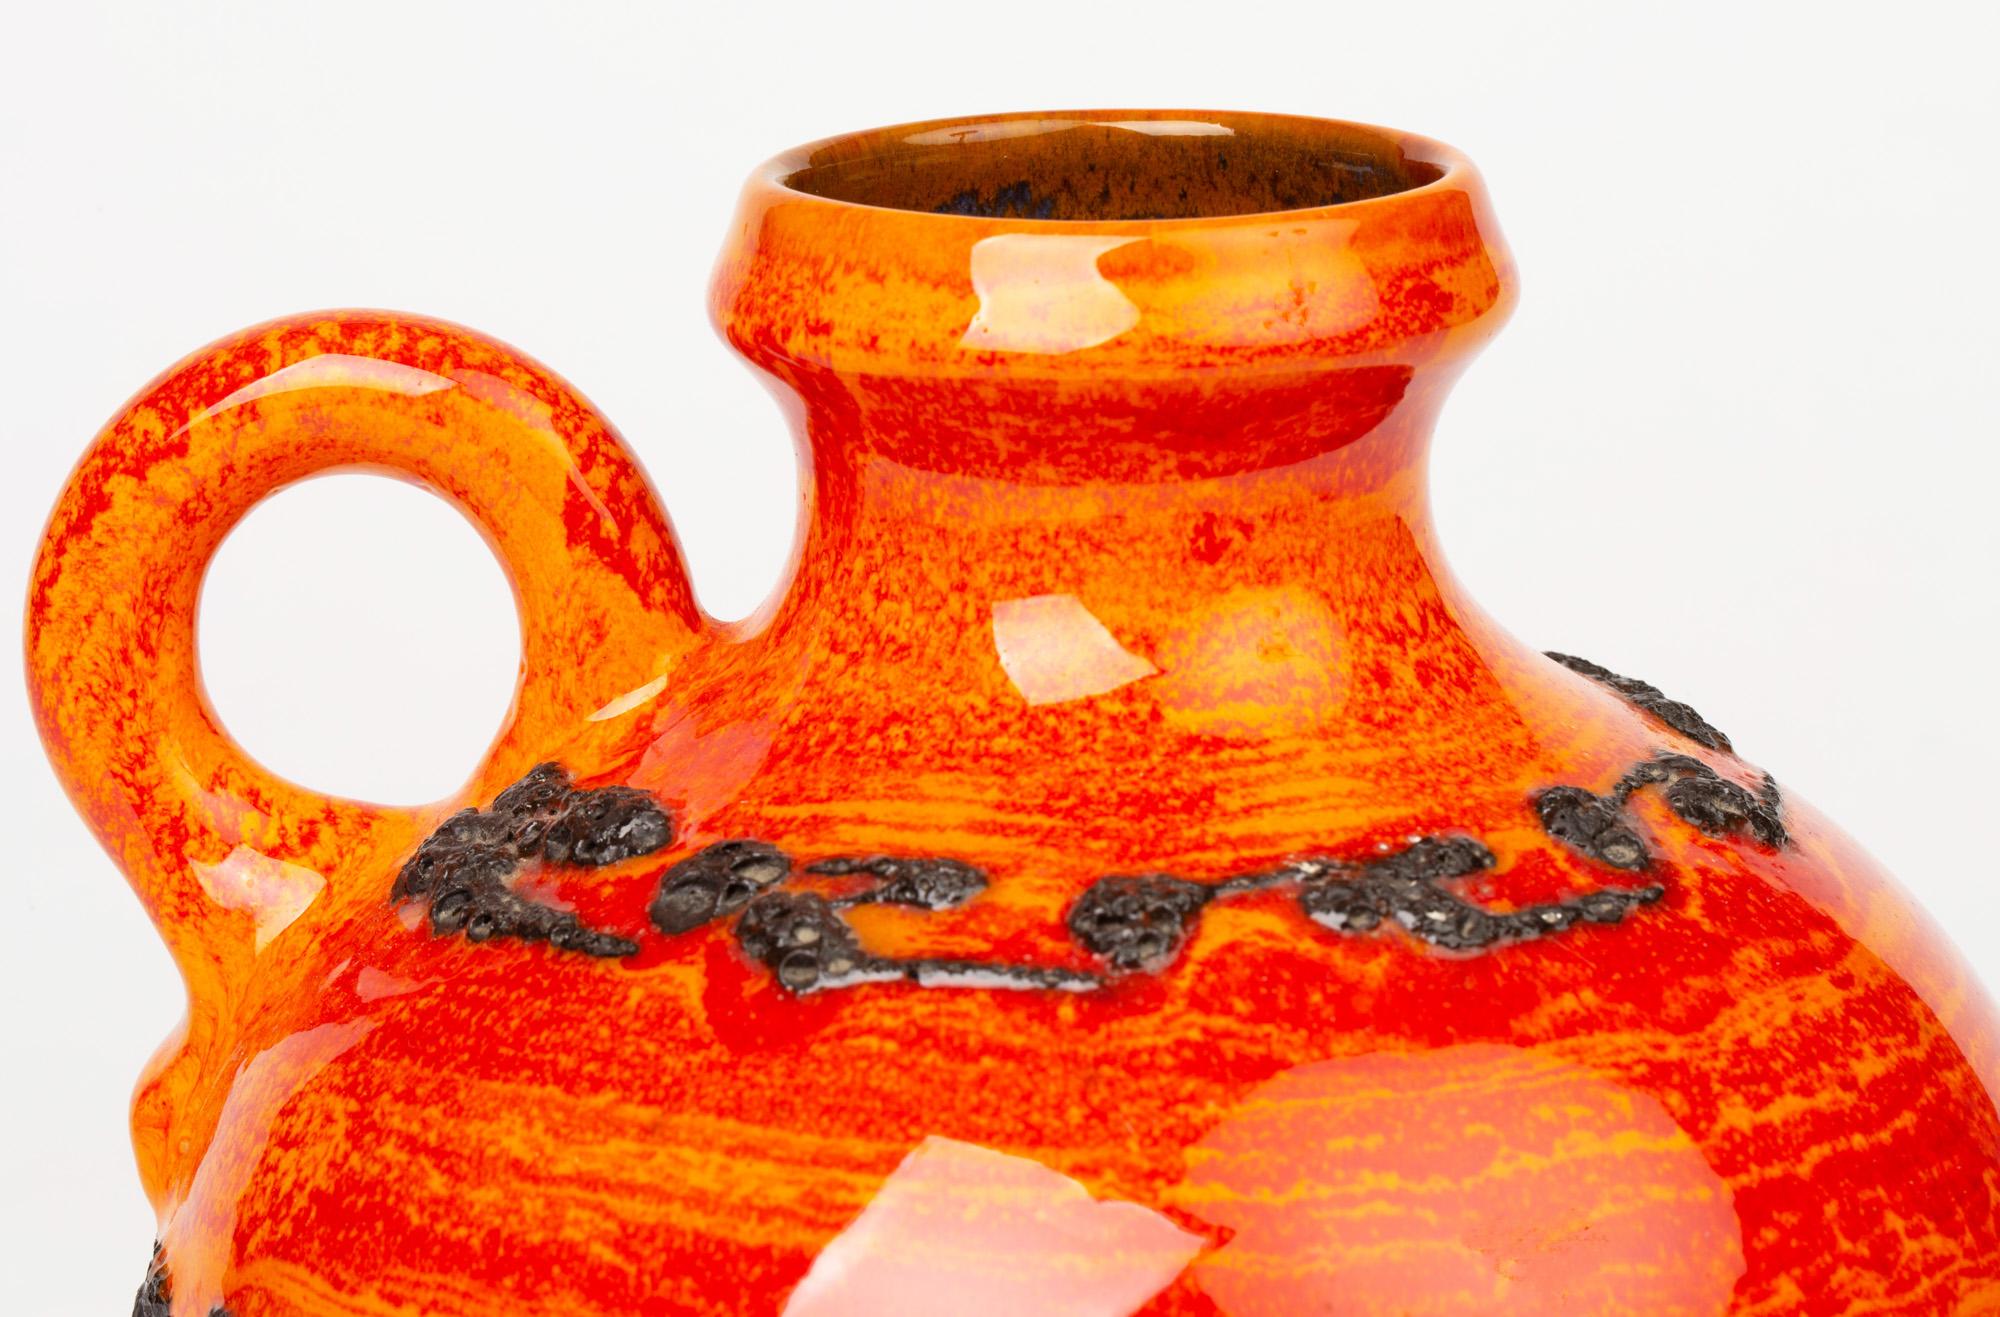 Kreutz Keramik German Midcentury Orange and Red Fat Lava Handled Vase For Sale 4